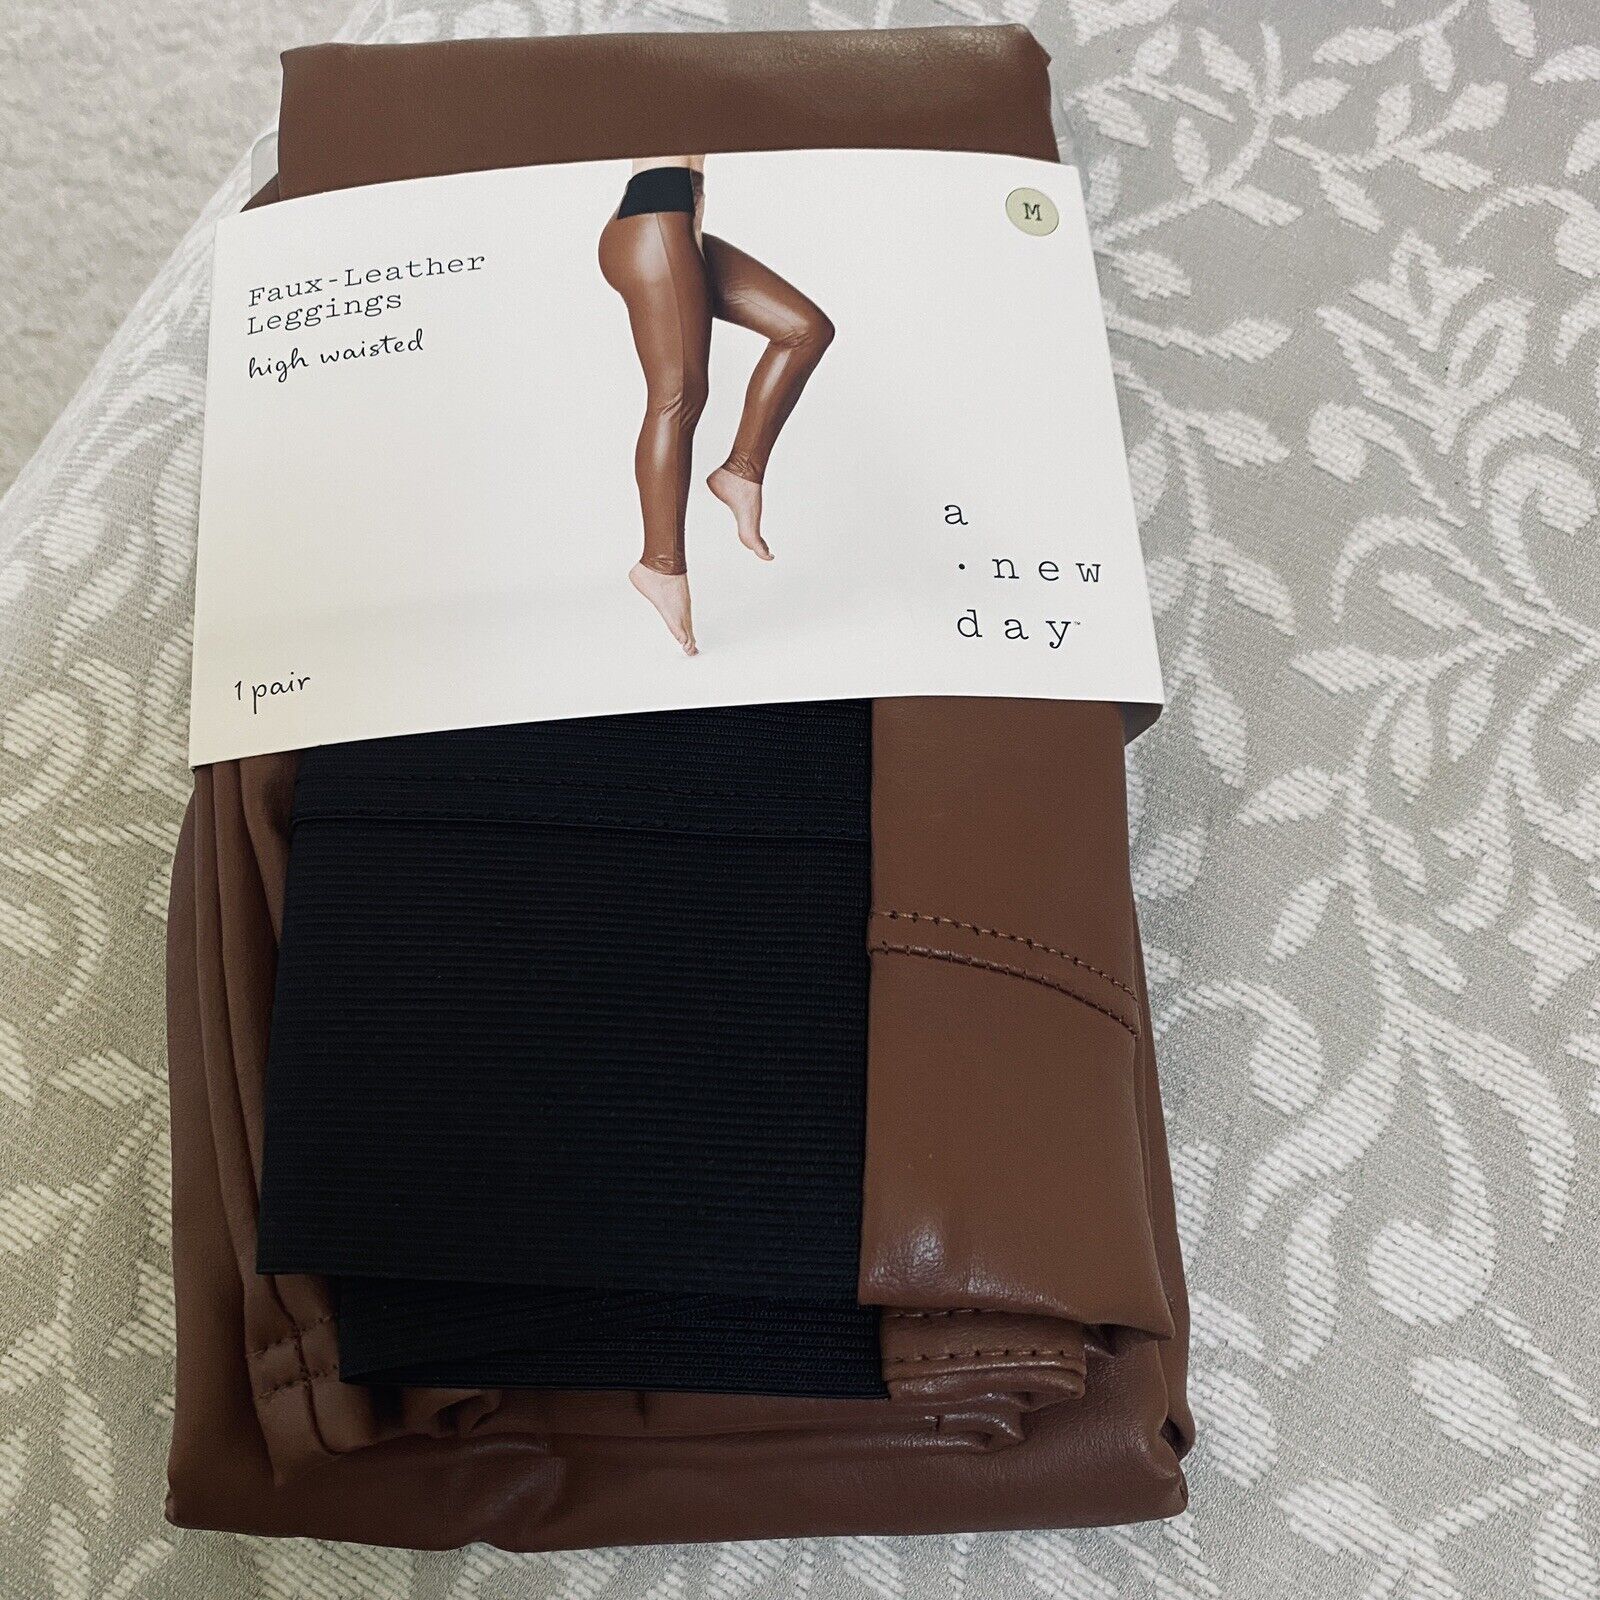 Women's High Waist Faux Leather Leggings - A New Day™ Dark Brown XL